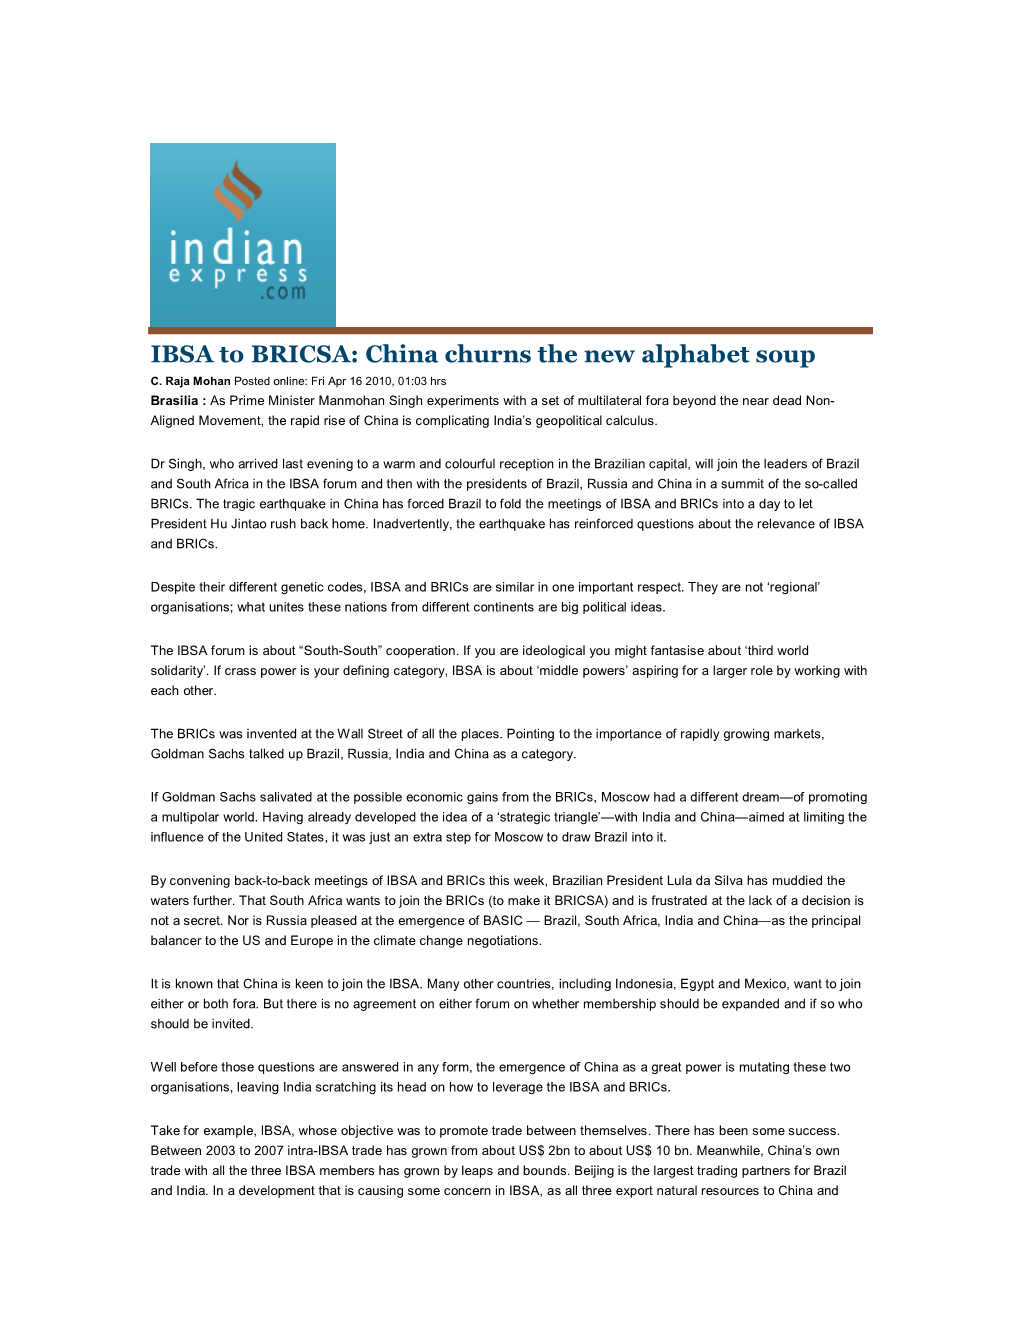 IBSA to BRICSA: China Churns the New Alphabet Soup C